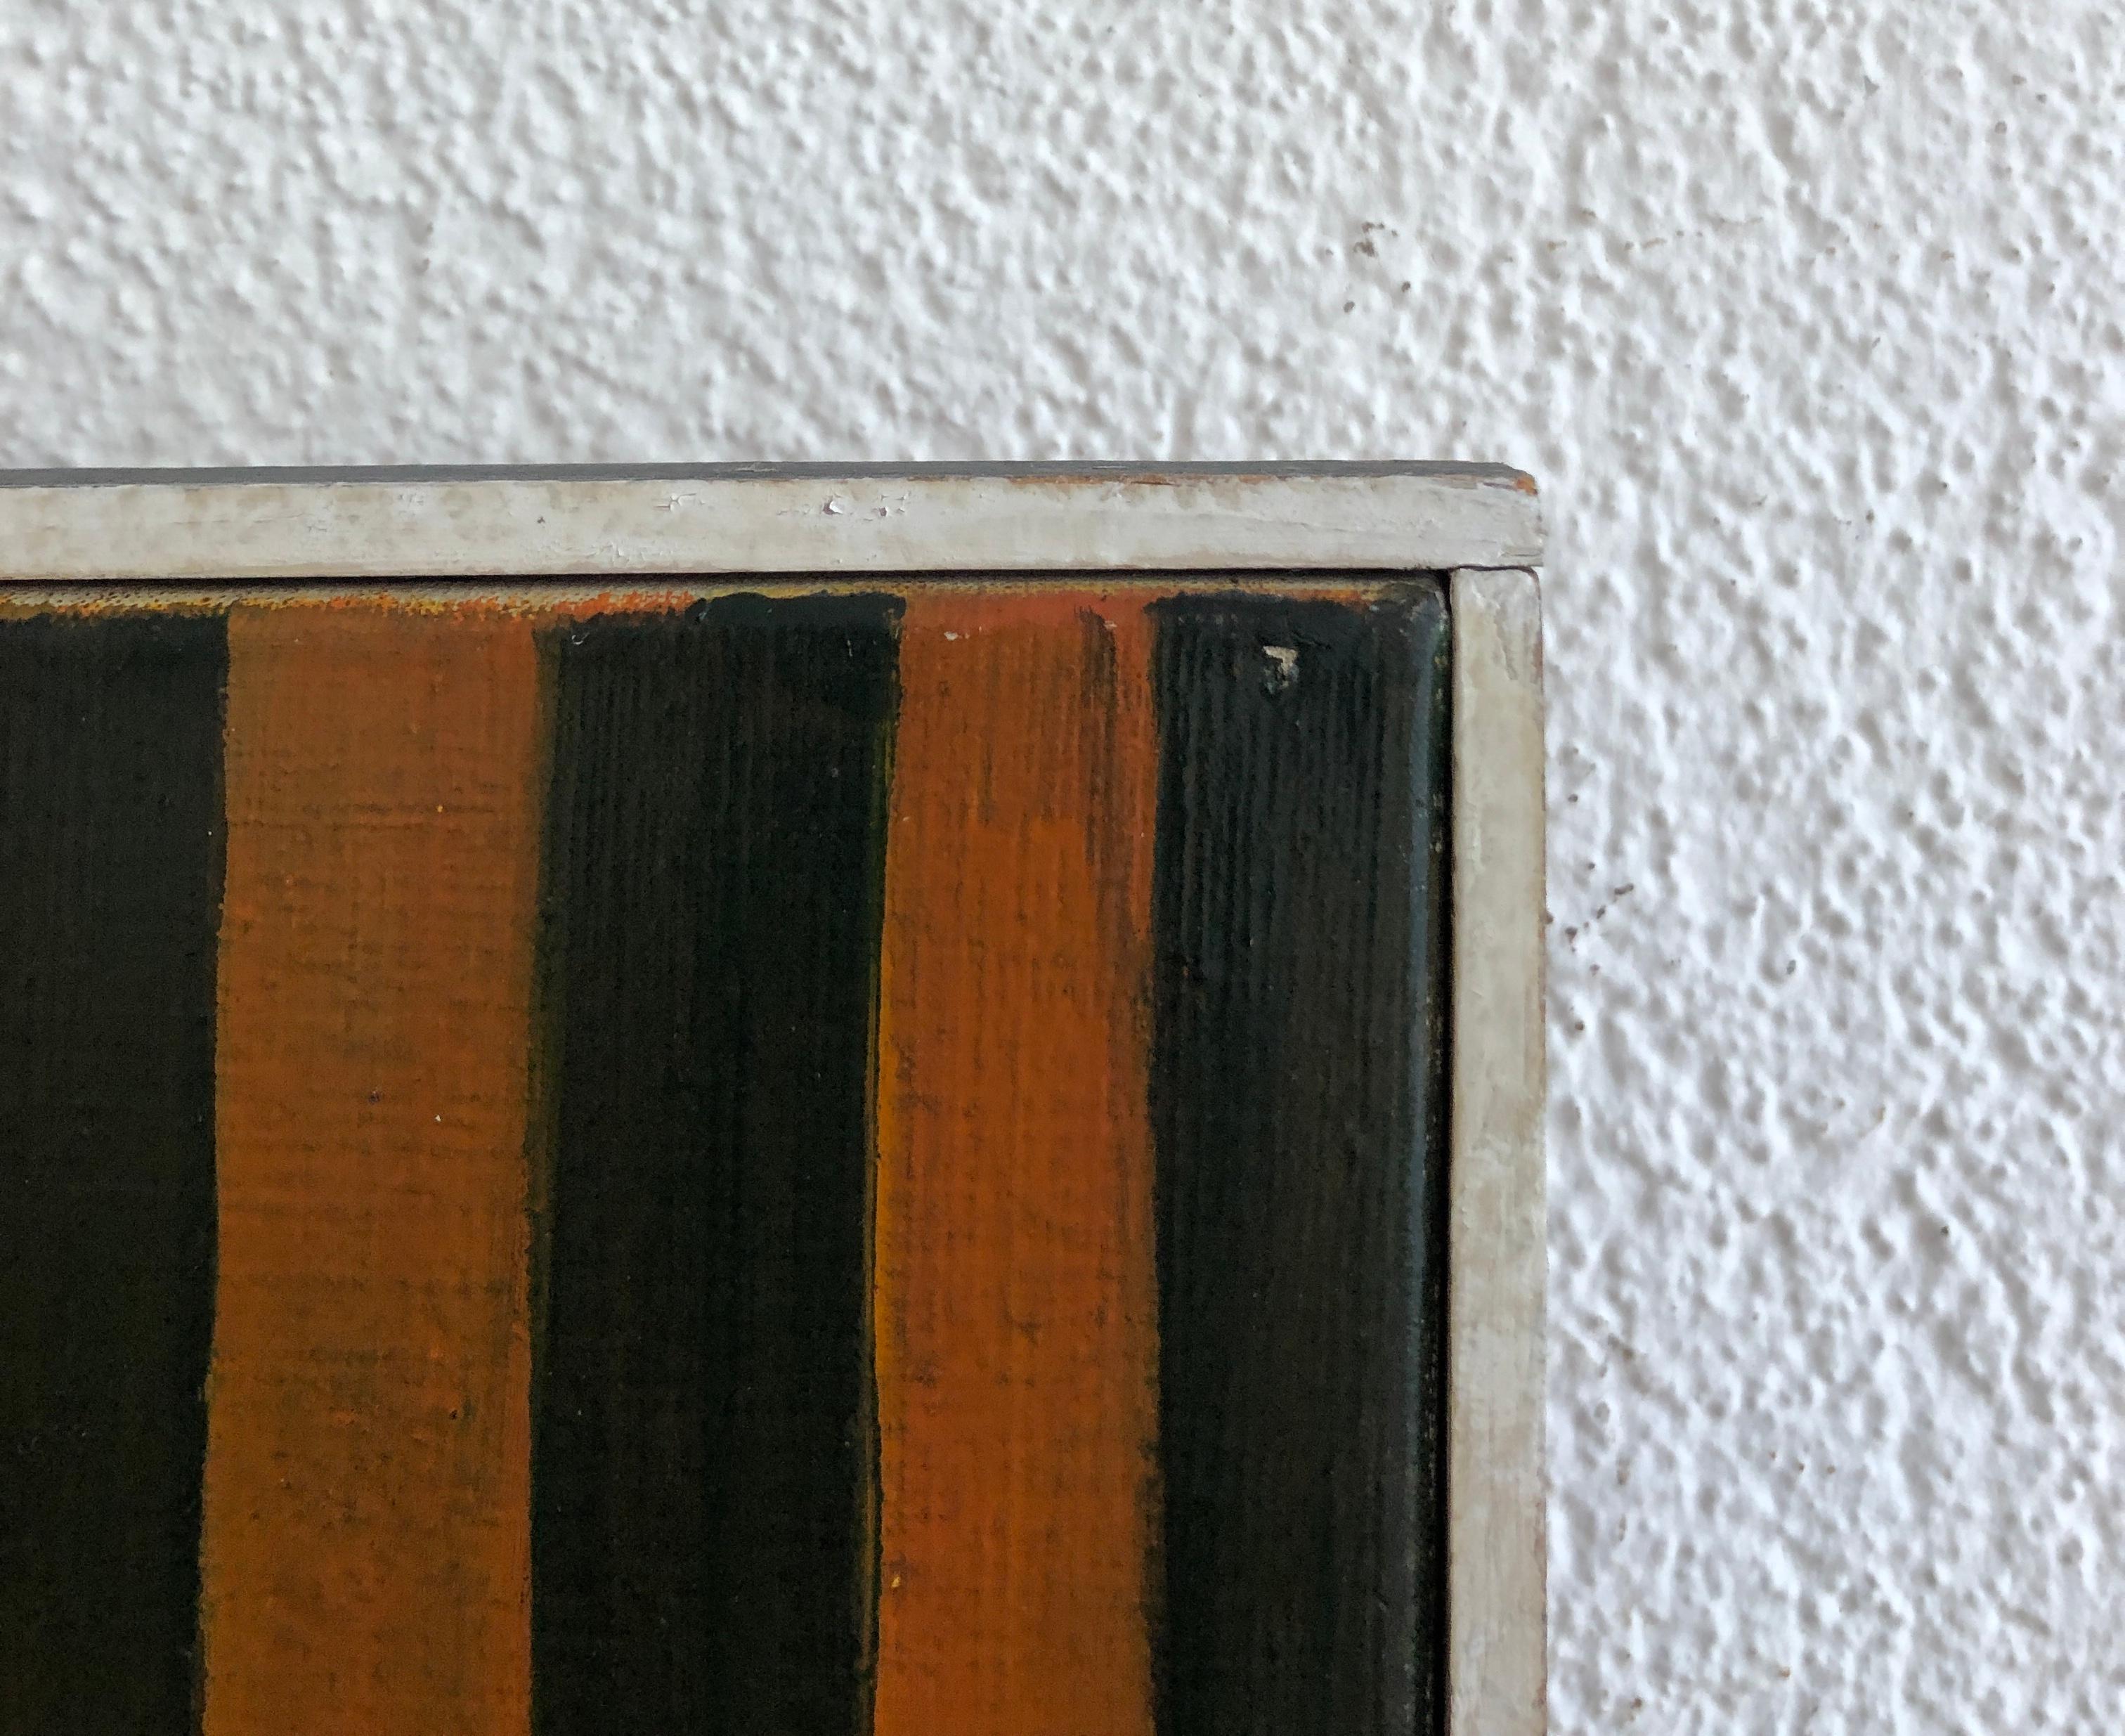 Work on canvas
Flush frame in black wood
74 x 55.5 x 5 cm